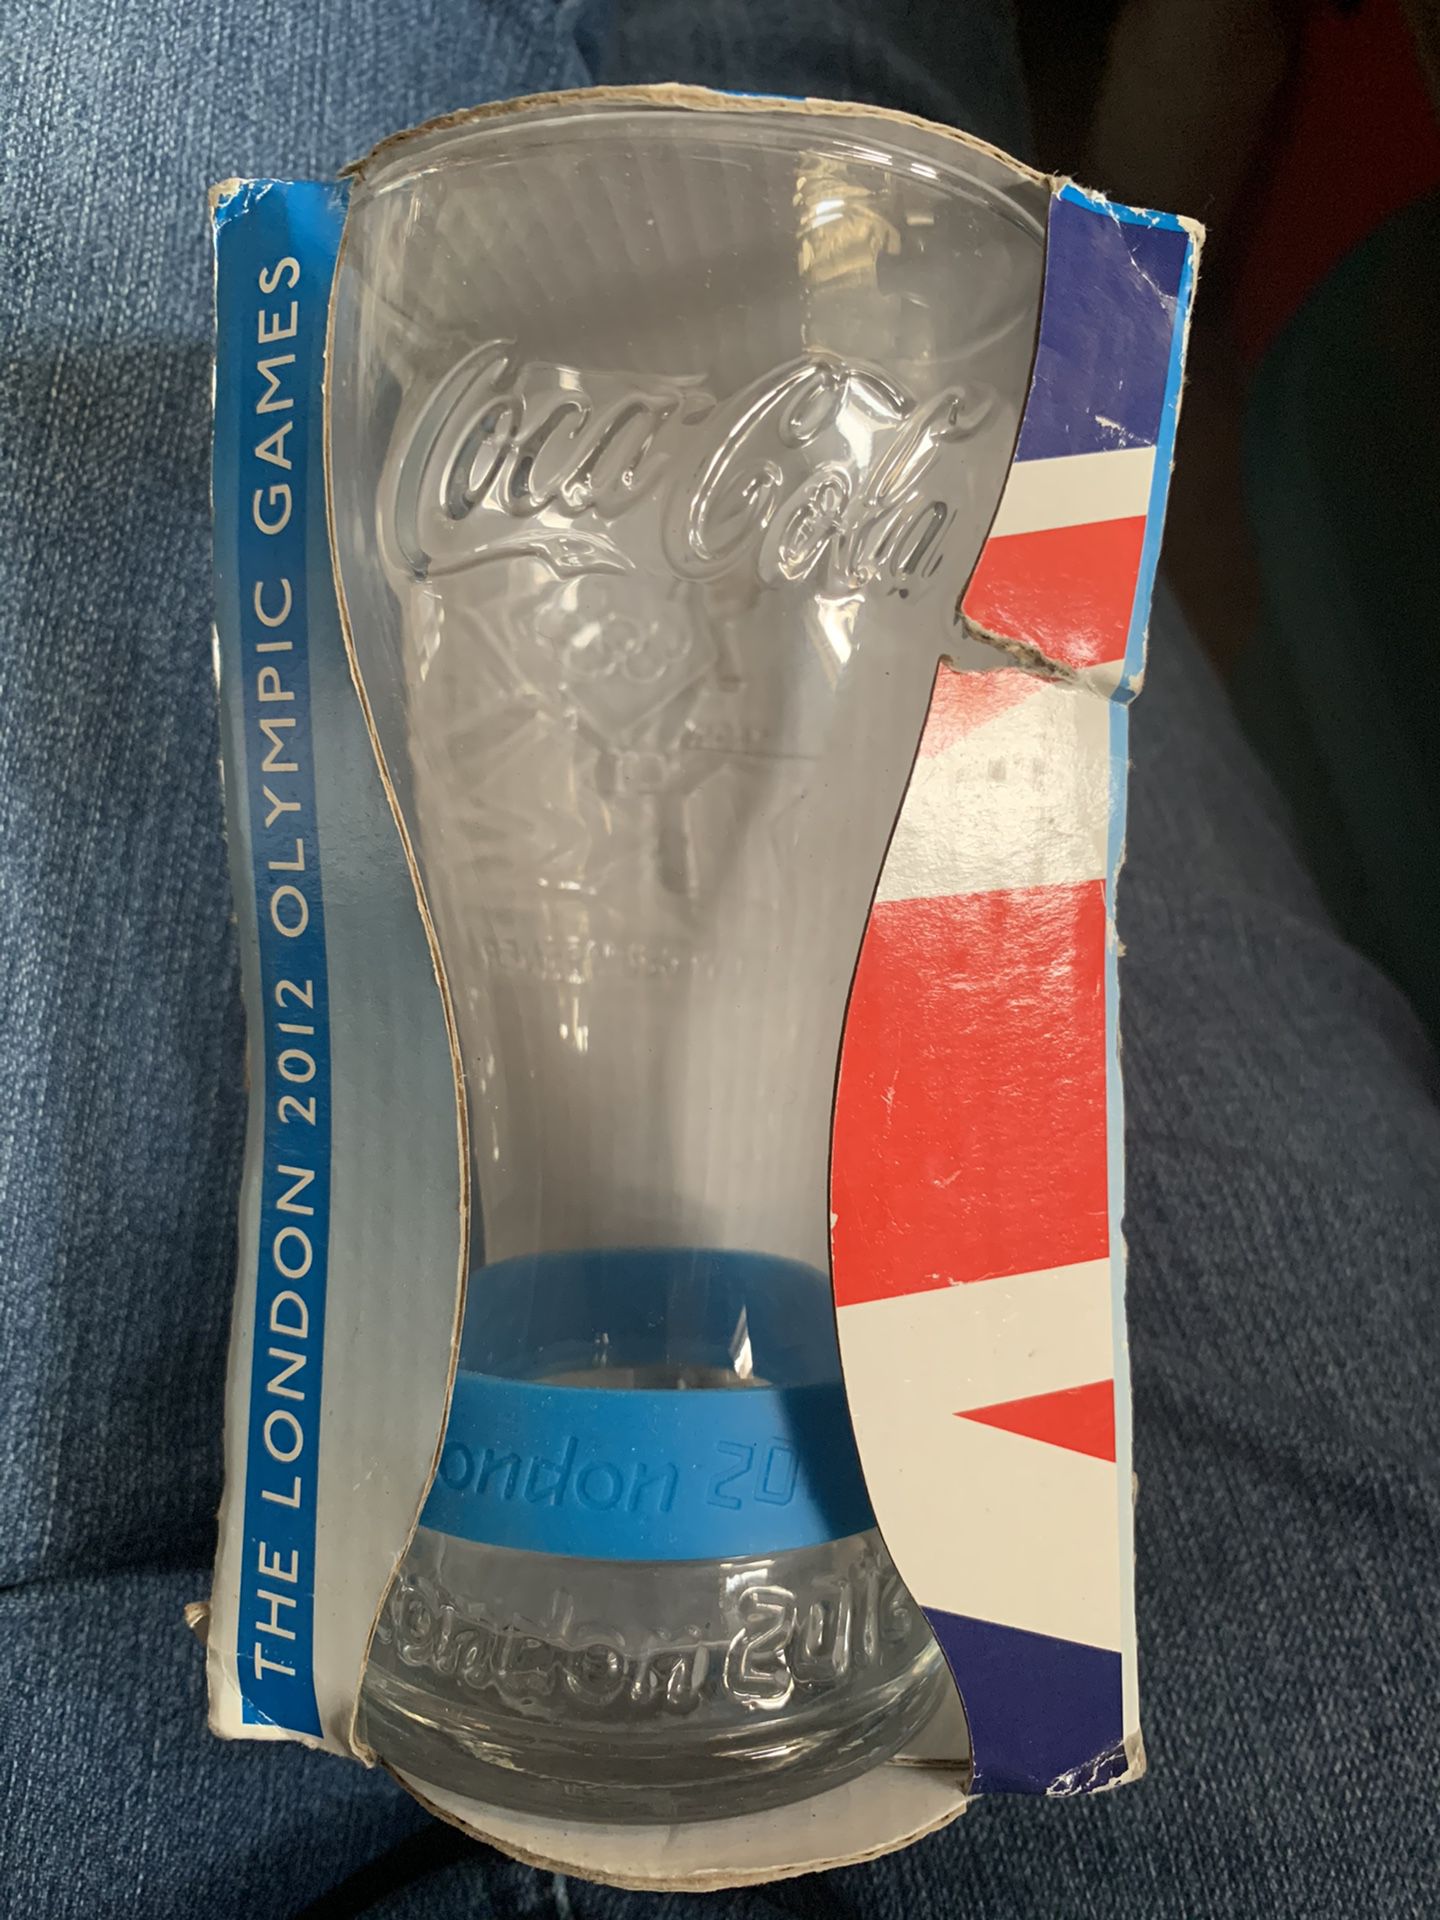 2012 London Olympic glass